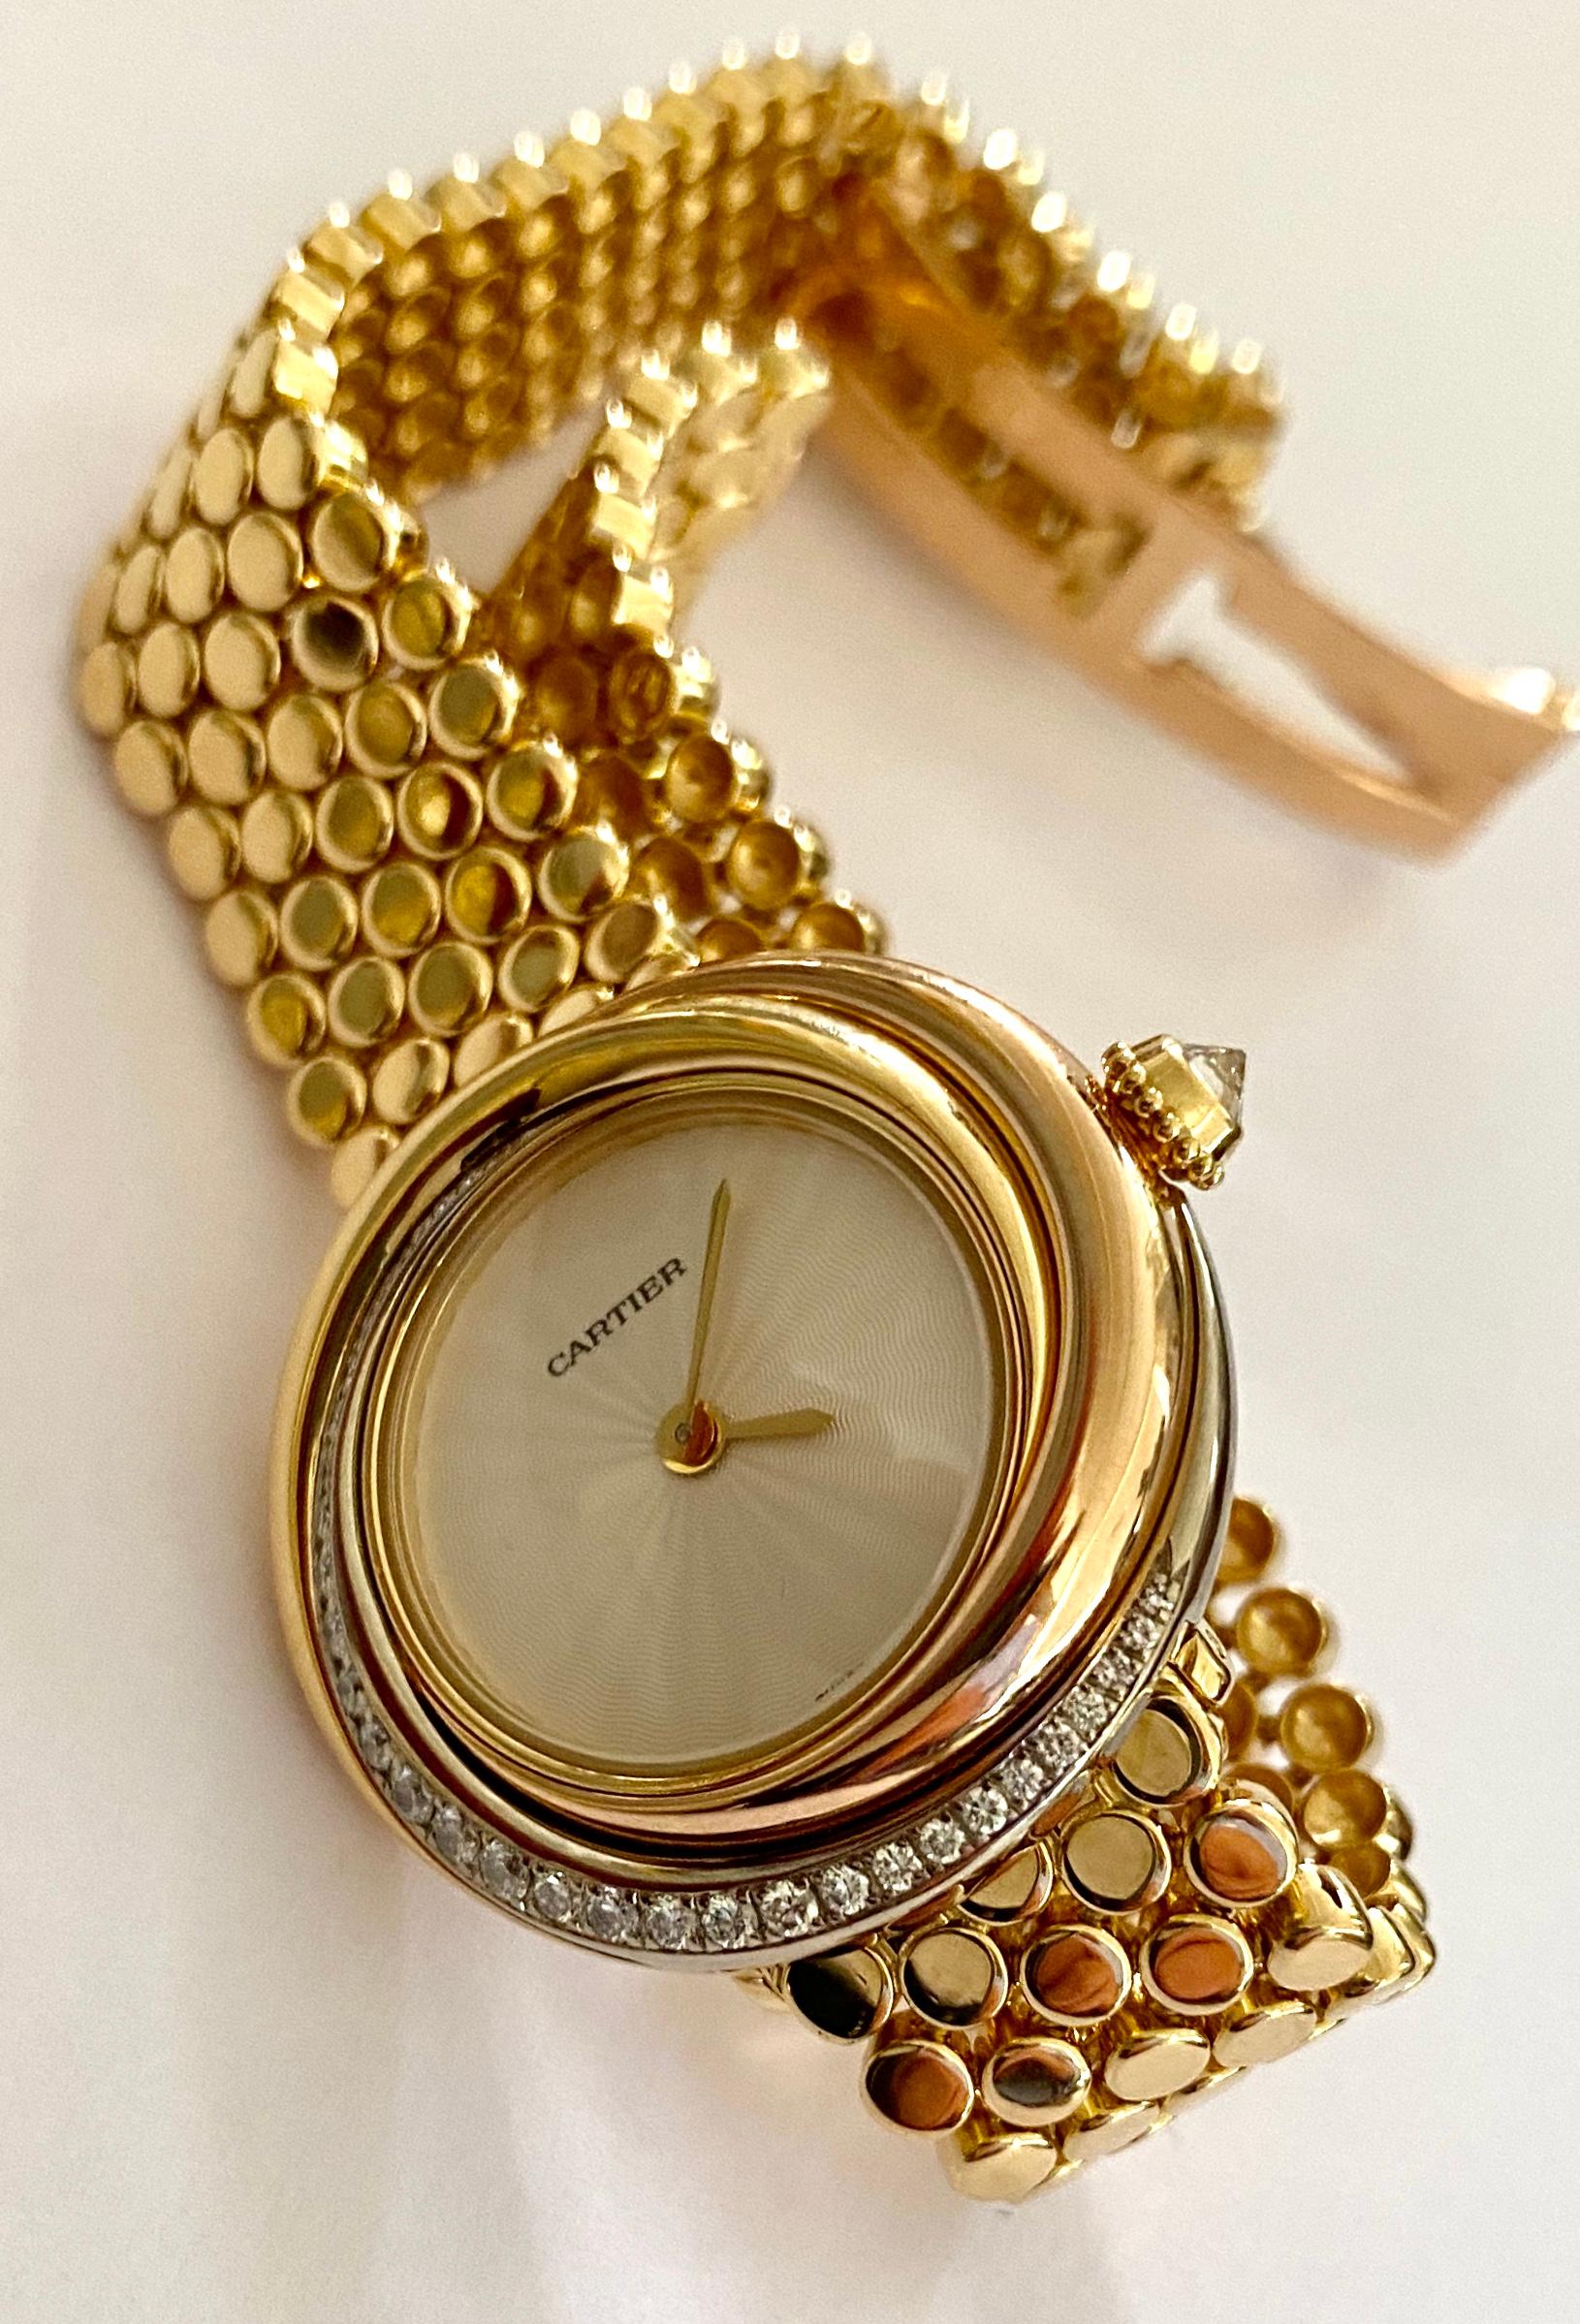 Briolette Cut Cartier, Trinity Watch in 18 Karat Gold 33 Diamonds and a 18 Karat Gold Bracelet